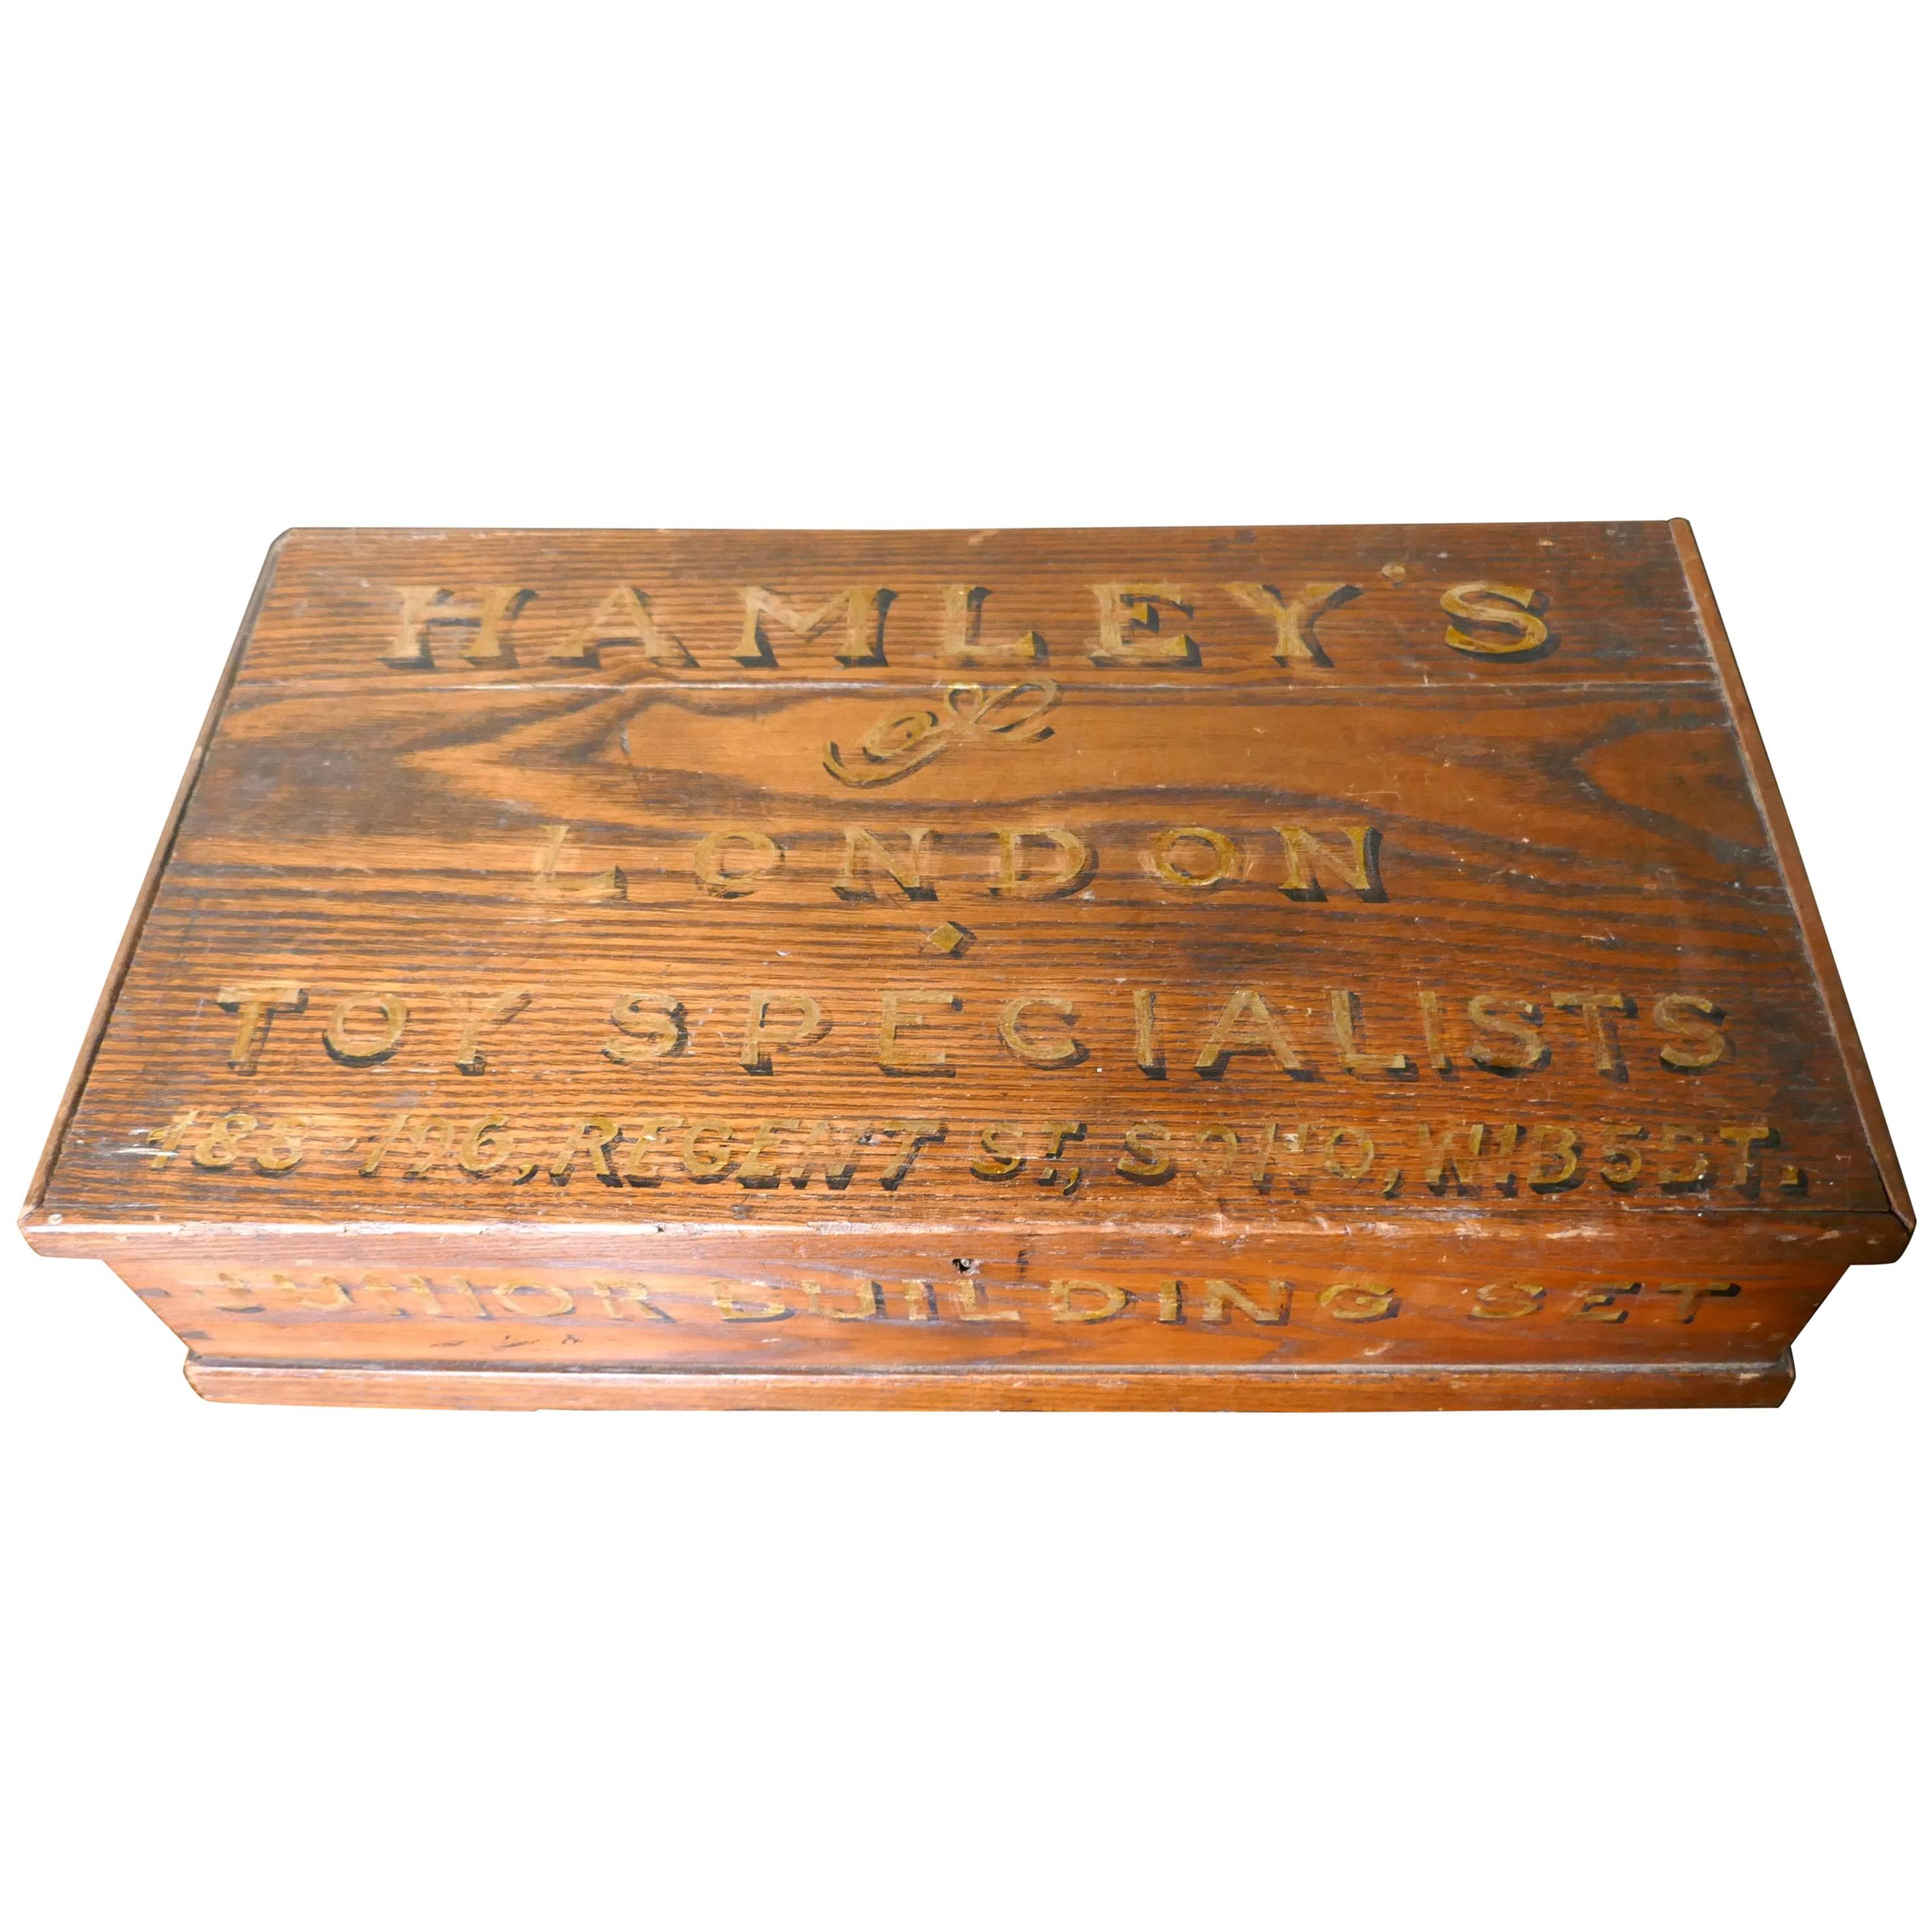 Hamley’s Toy Shop Real Stone Block Junior Building Set, Boxed, Victorian